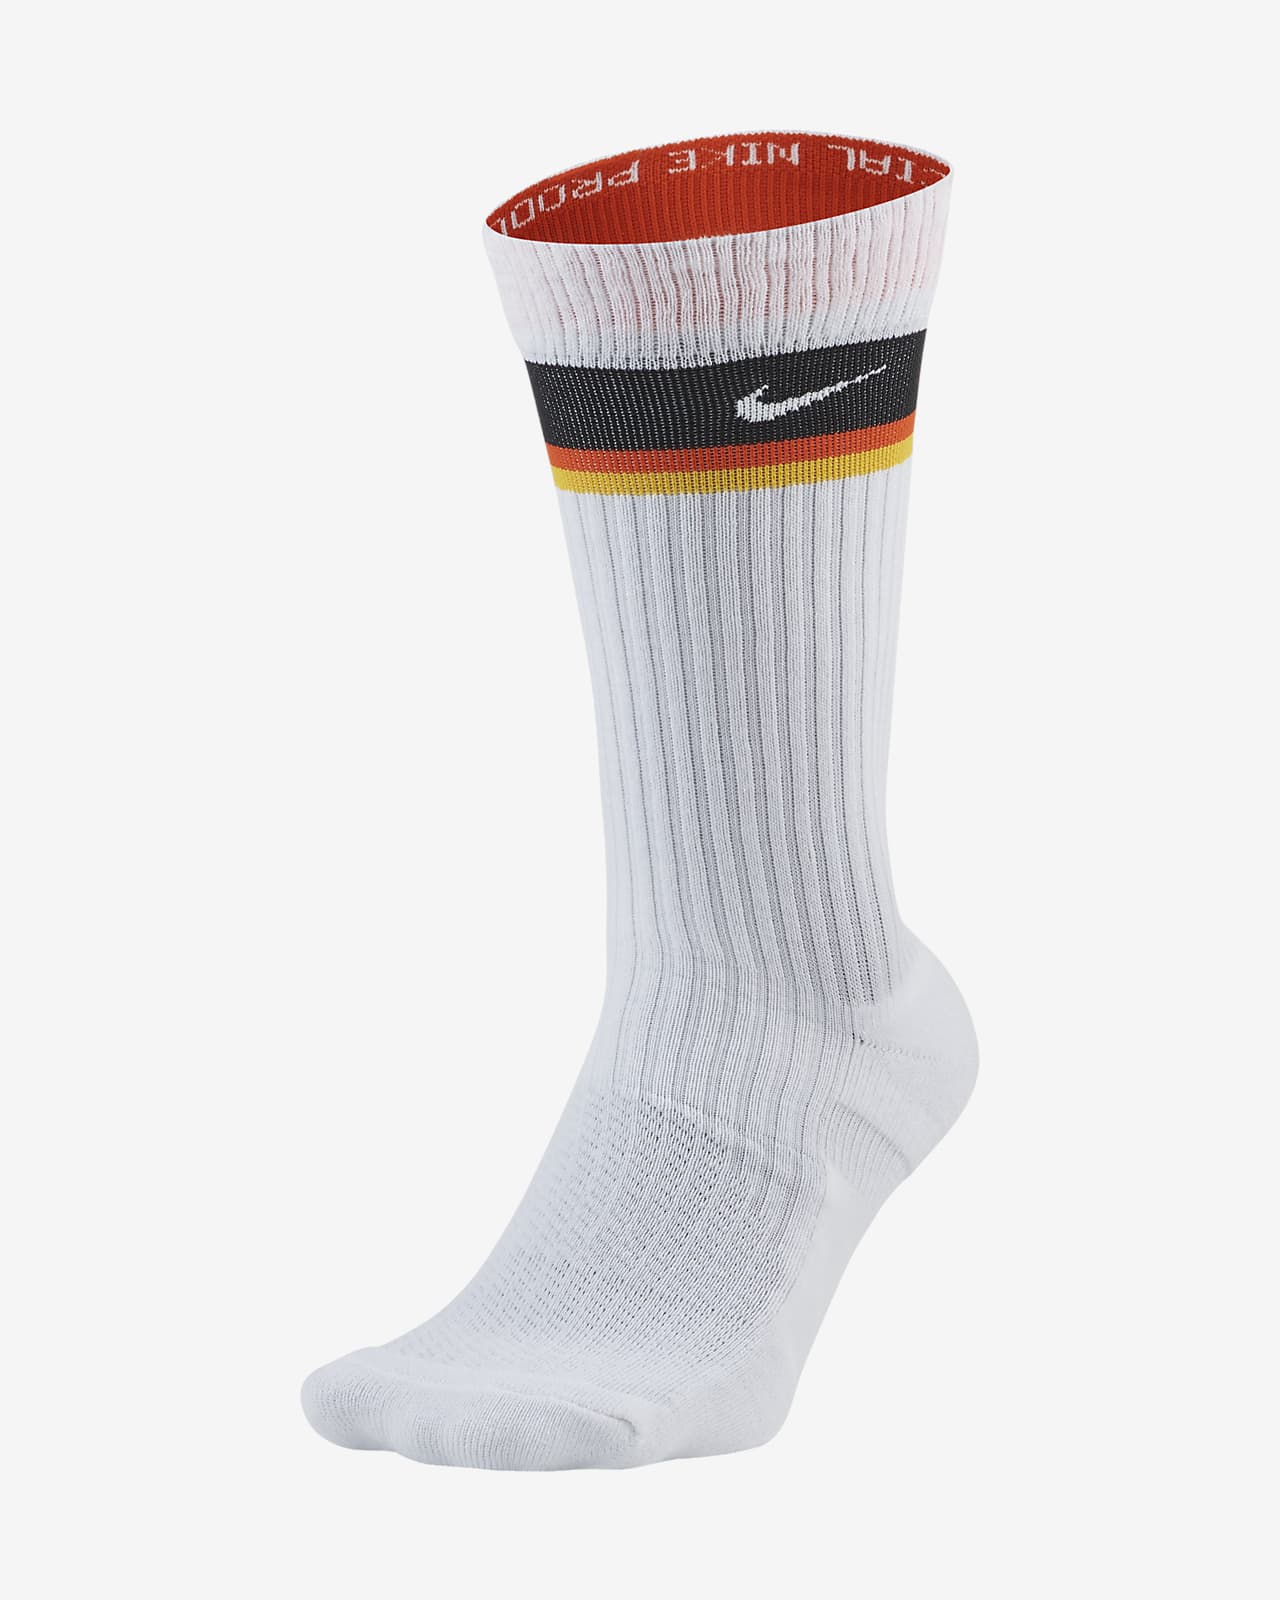 white nike softball socks